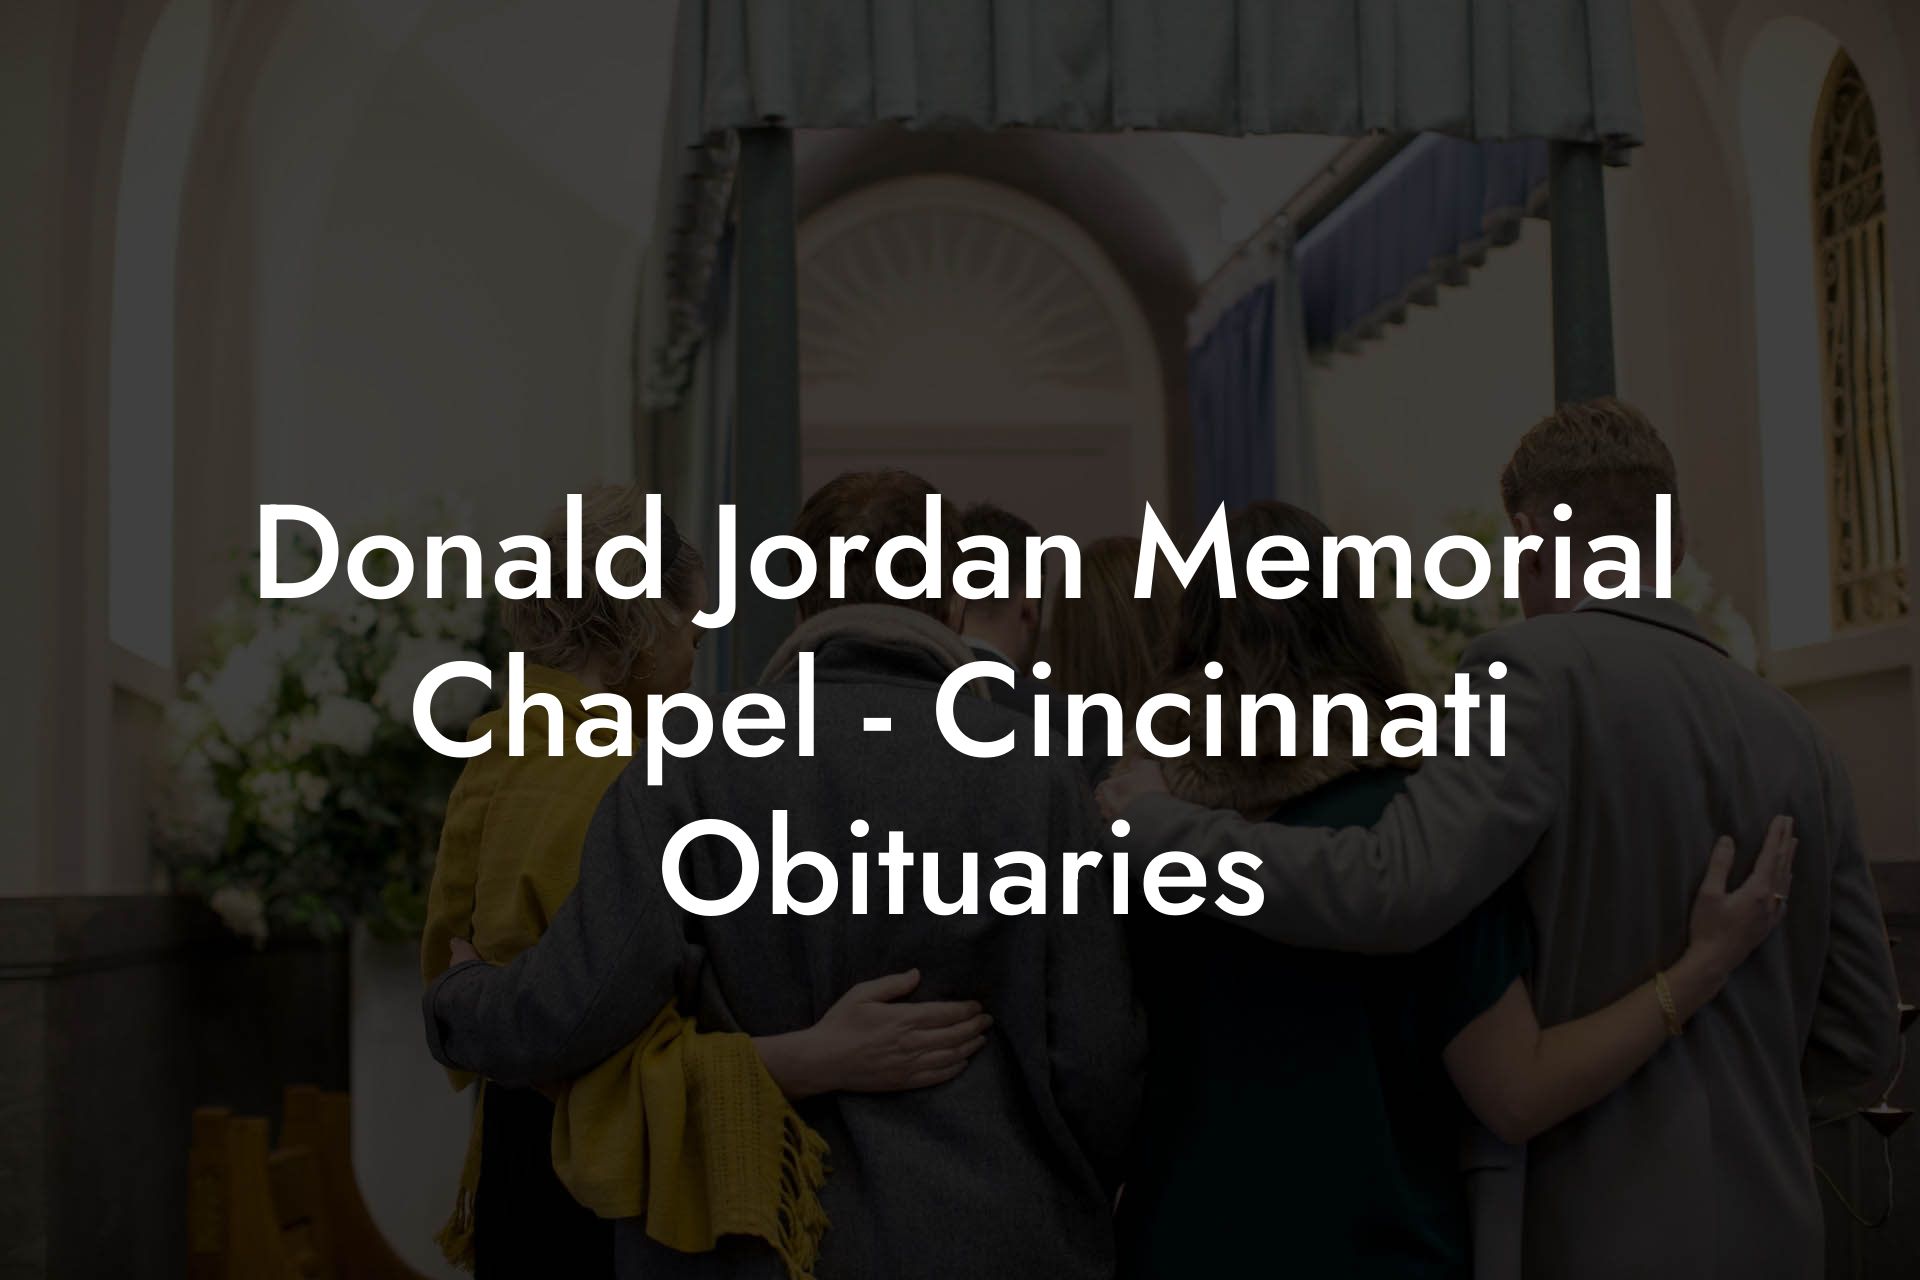 Donald Jordan Memorial Chapel - Cincinnati Obituaries